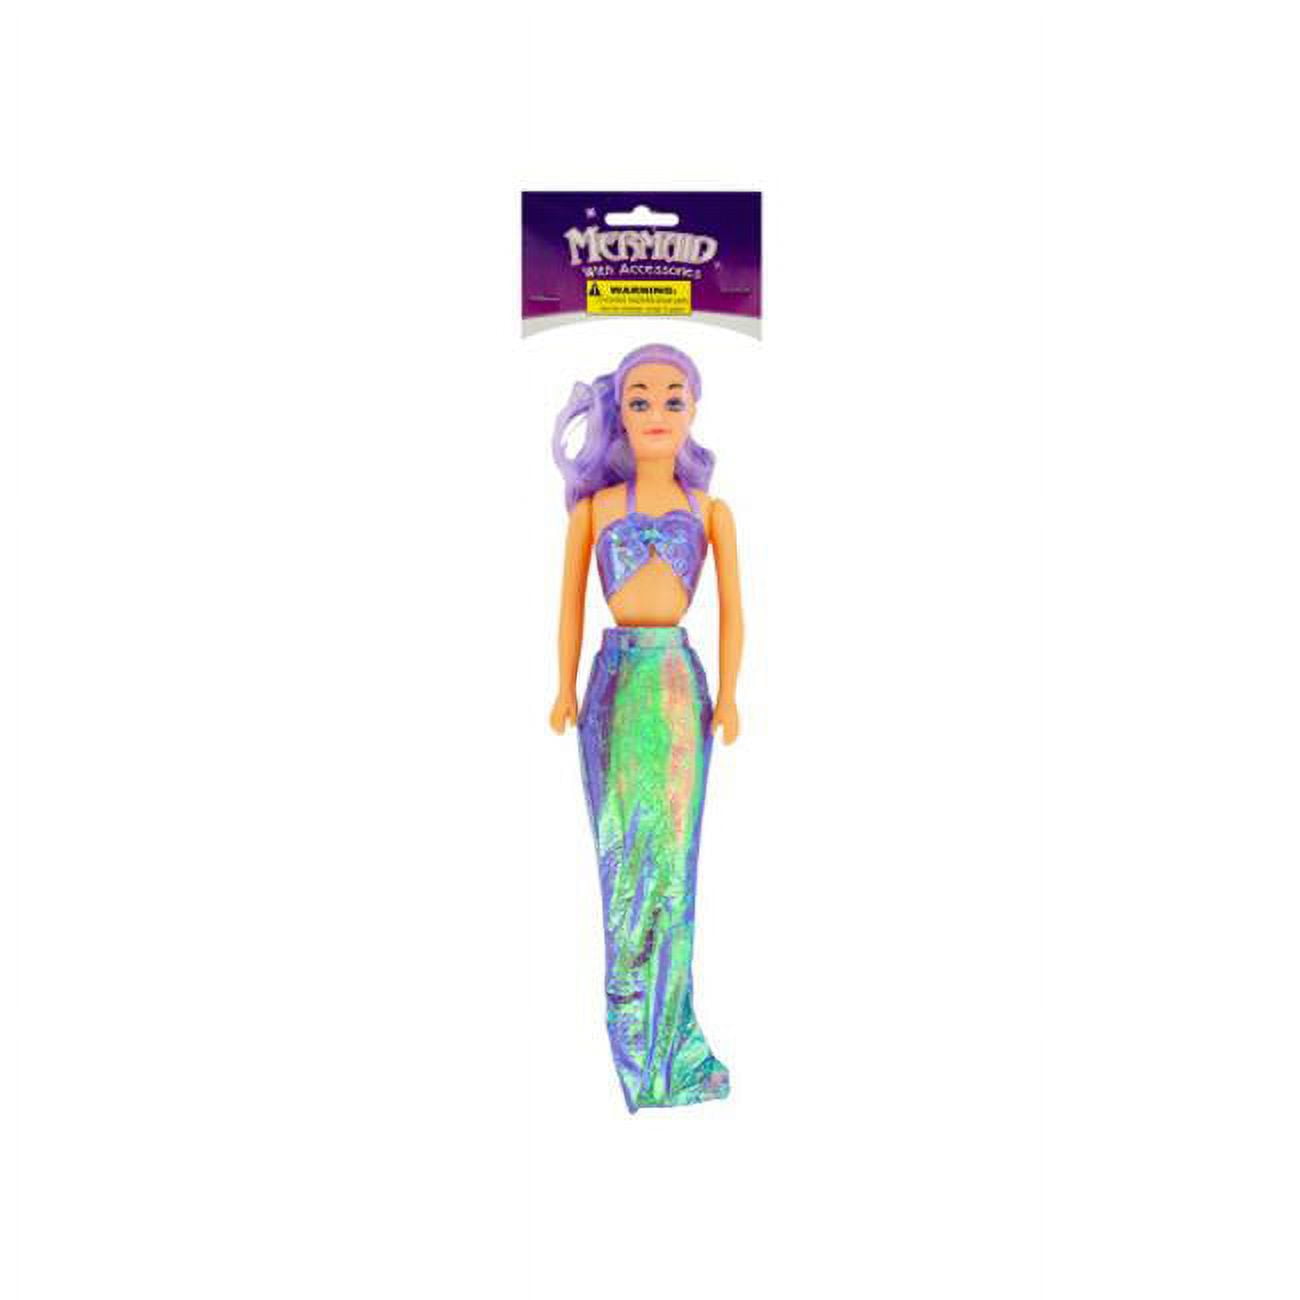 Wholesale AHADERMAKER 1Pc Mermaid Fabric Doll Dress Clothing Decoration  Material 